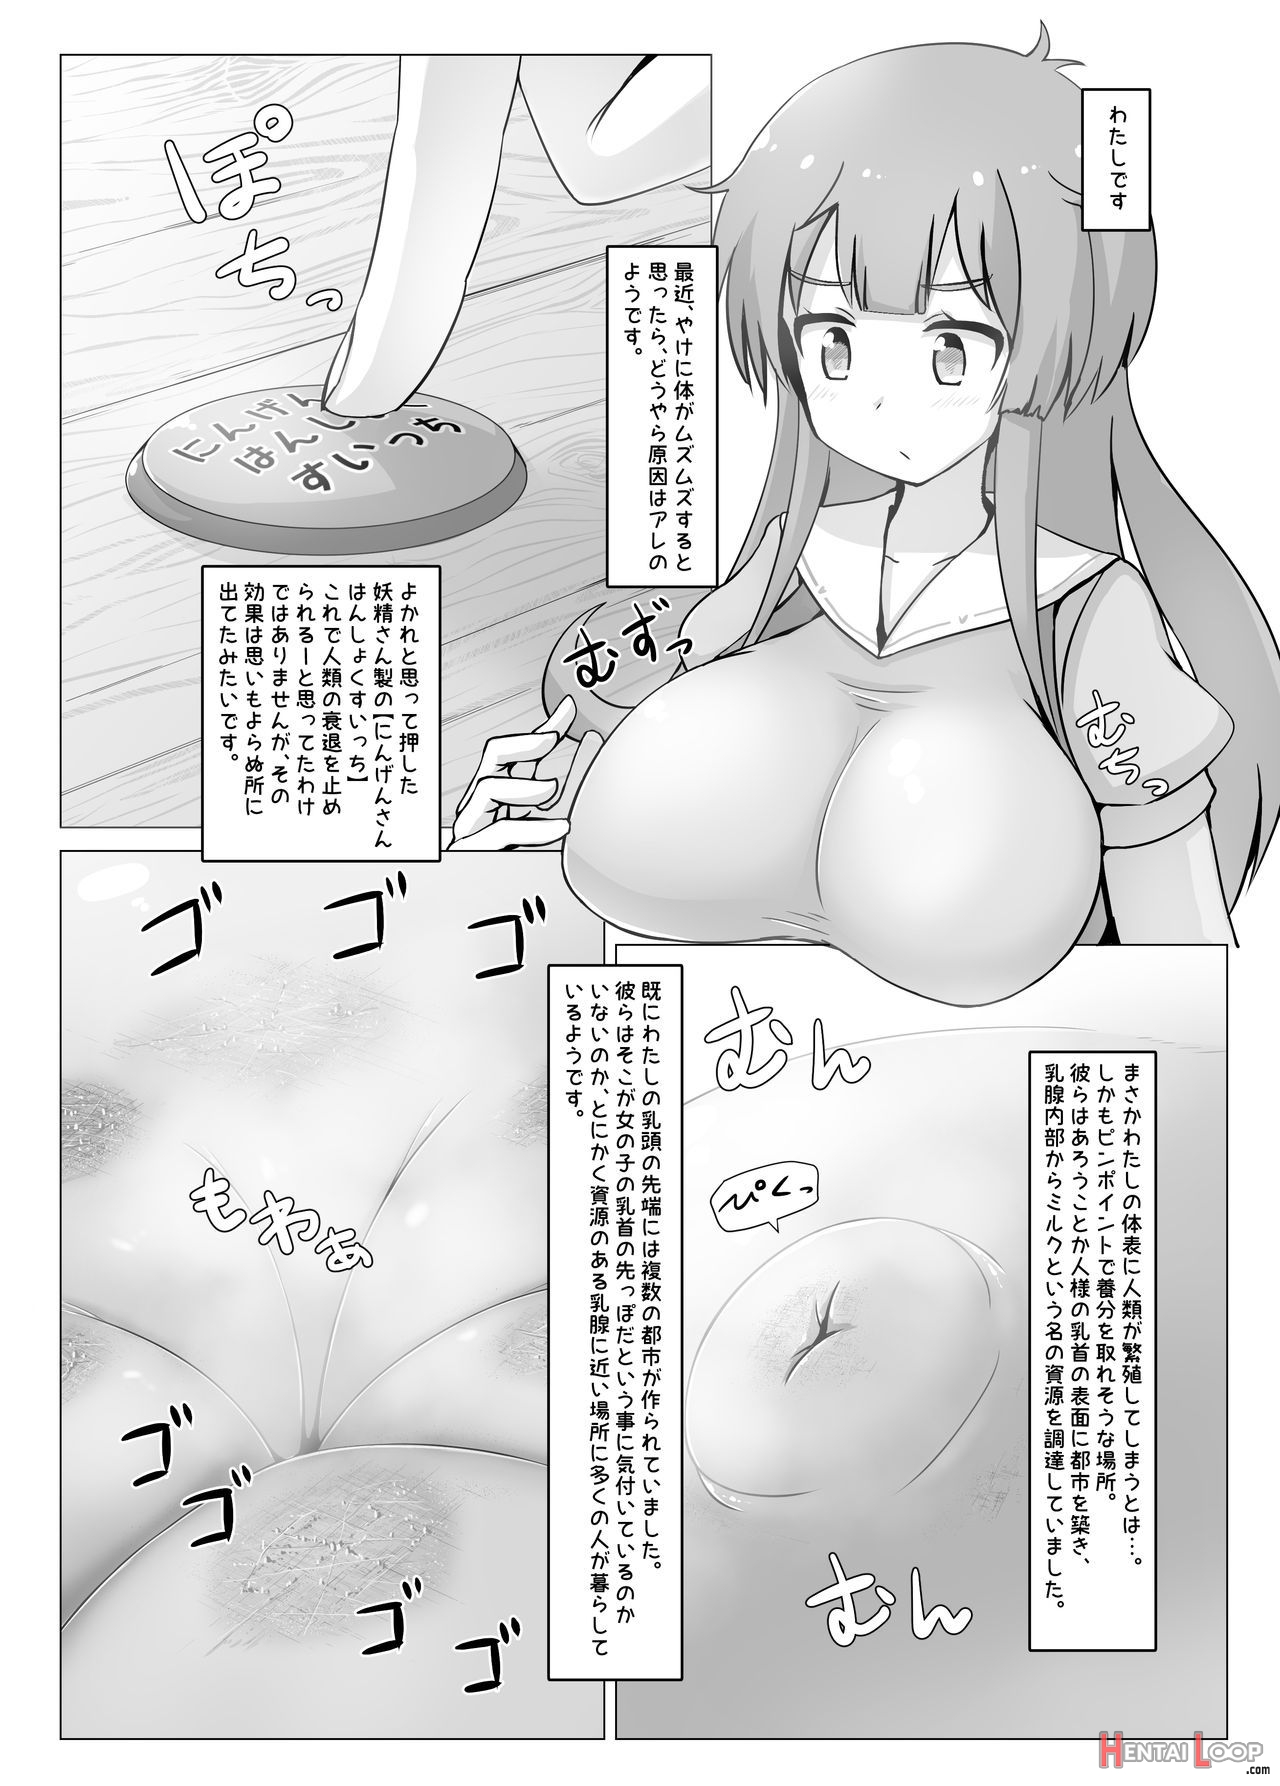 Watashi-chan Made The Decline page 10